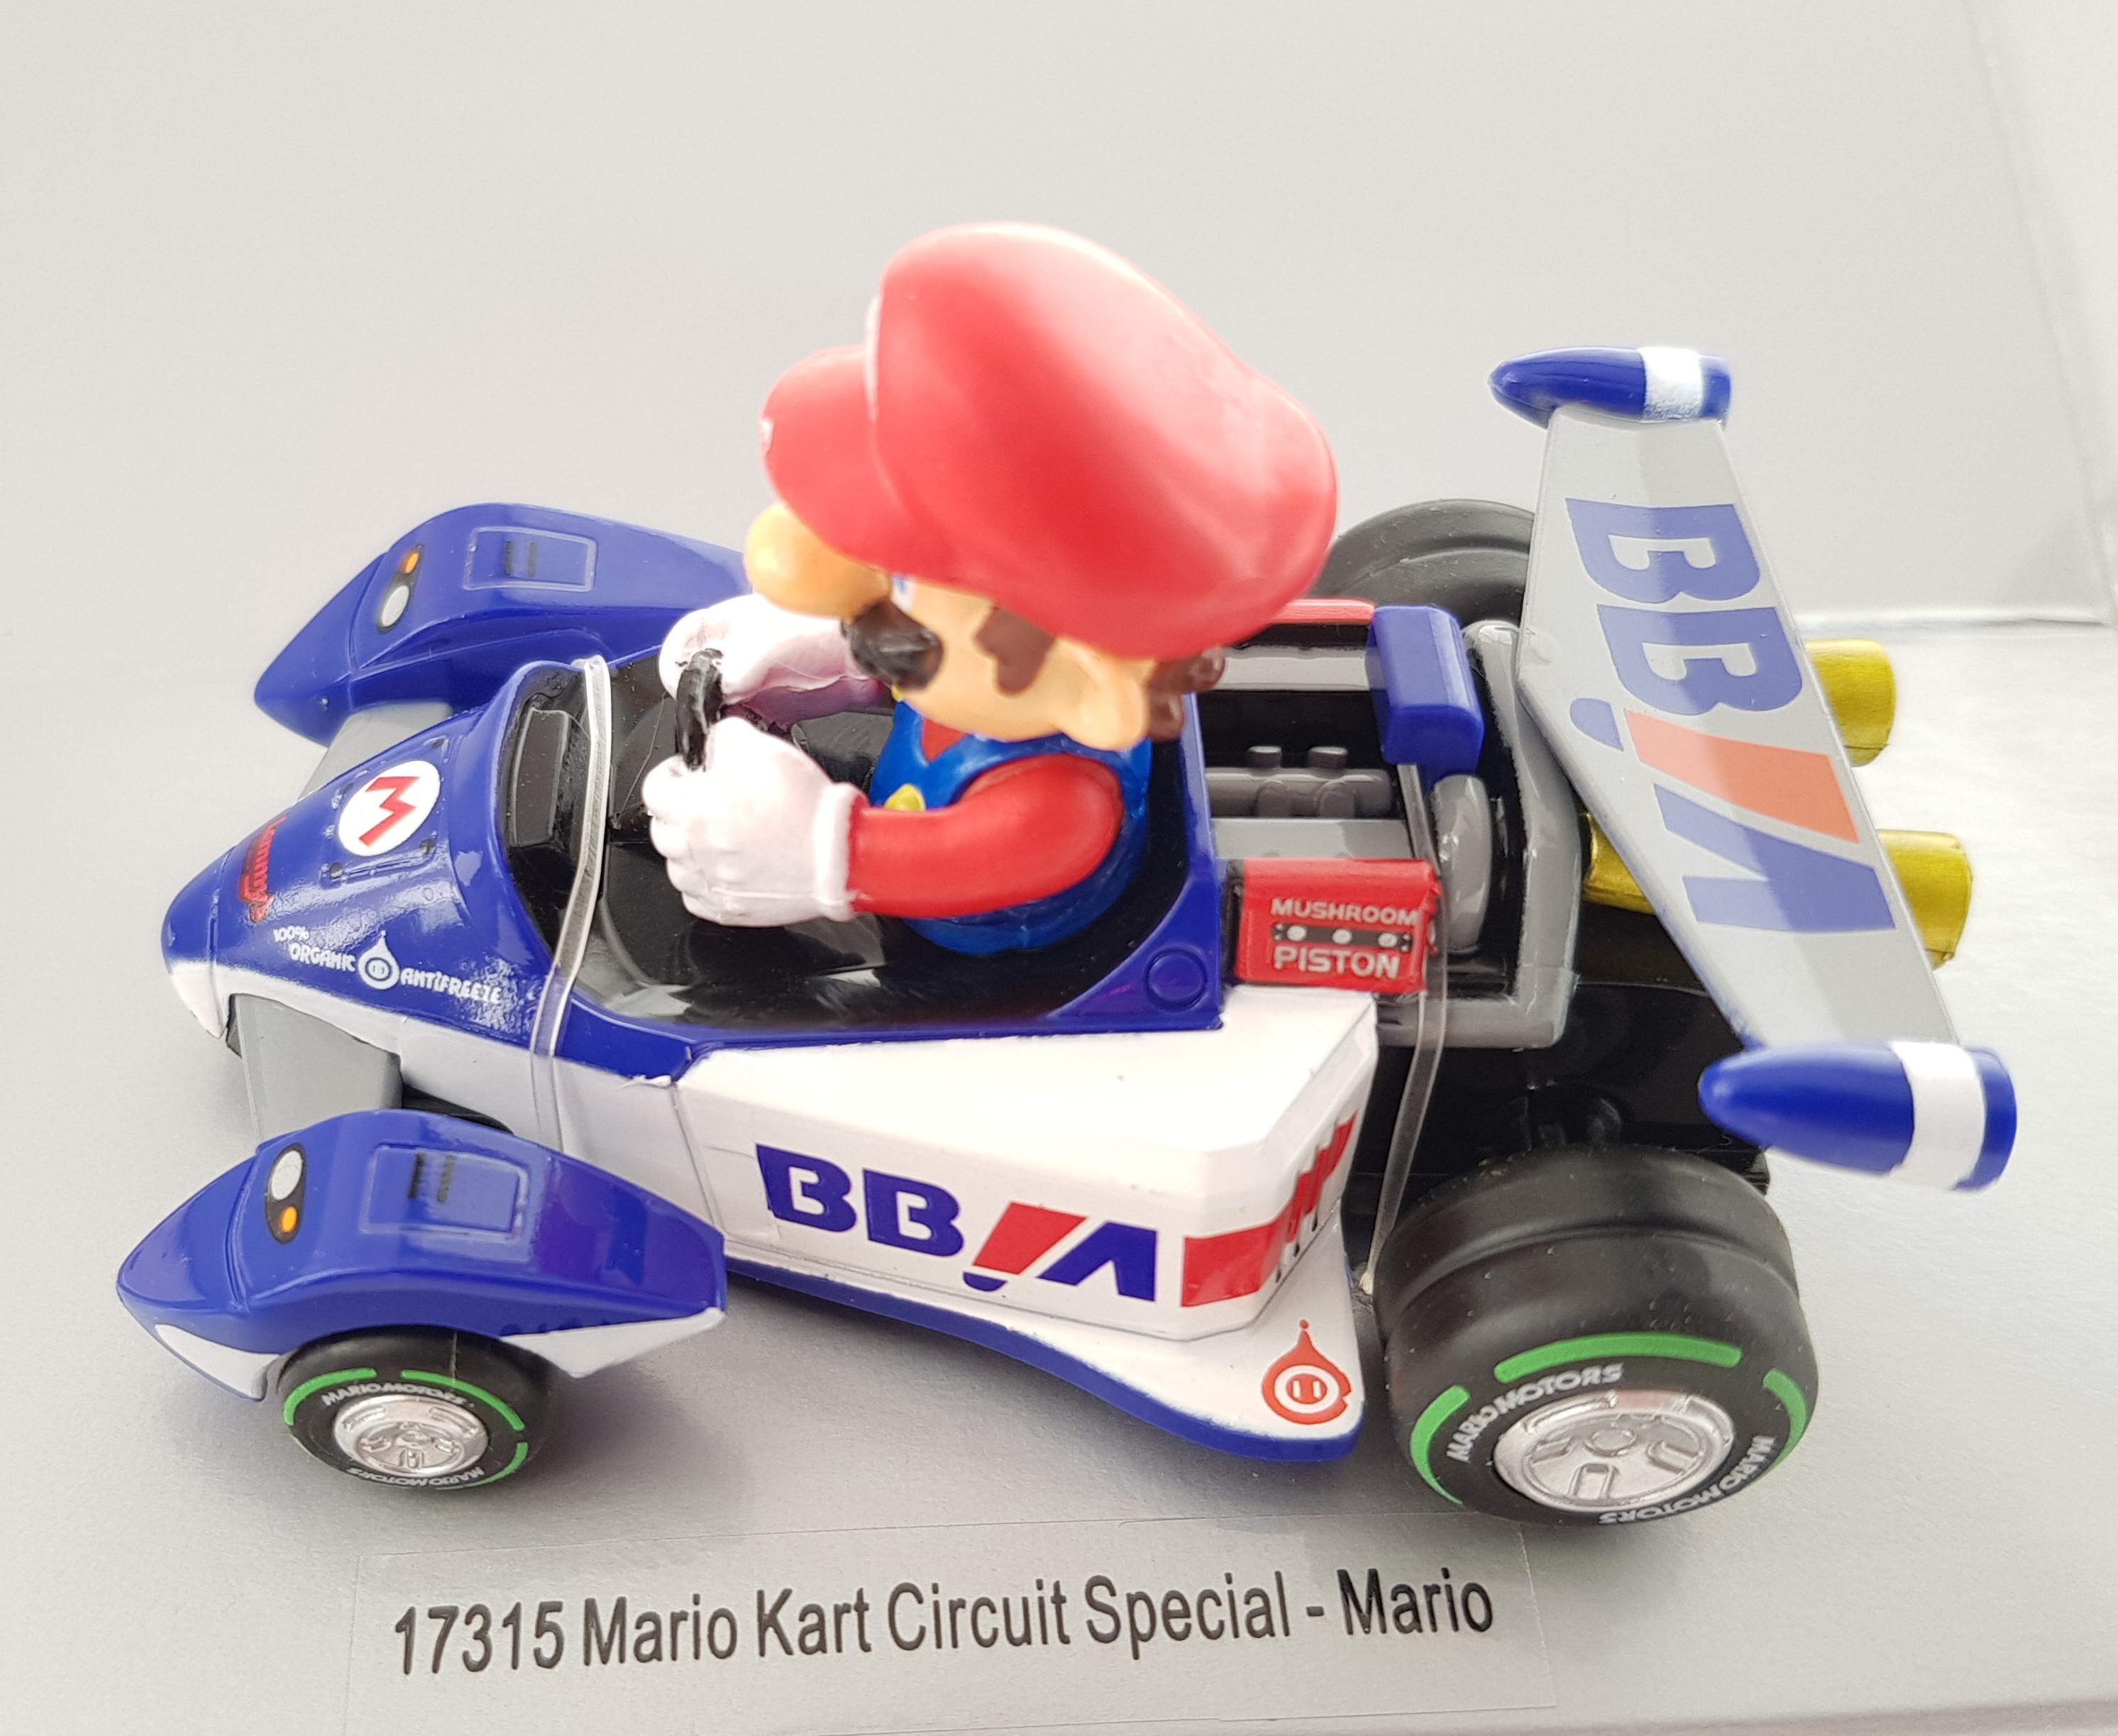 Pull & Speed Nintendo Mario Kart Circuit Special "Mario" Pull-Back 1:43